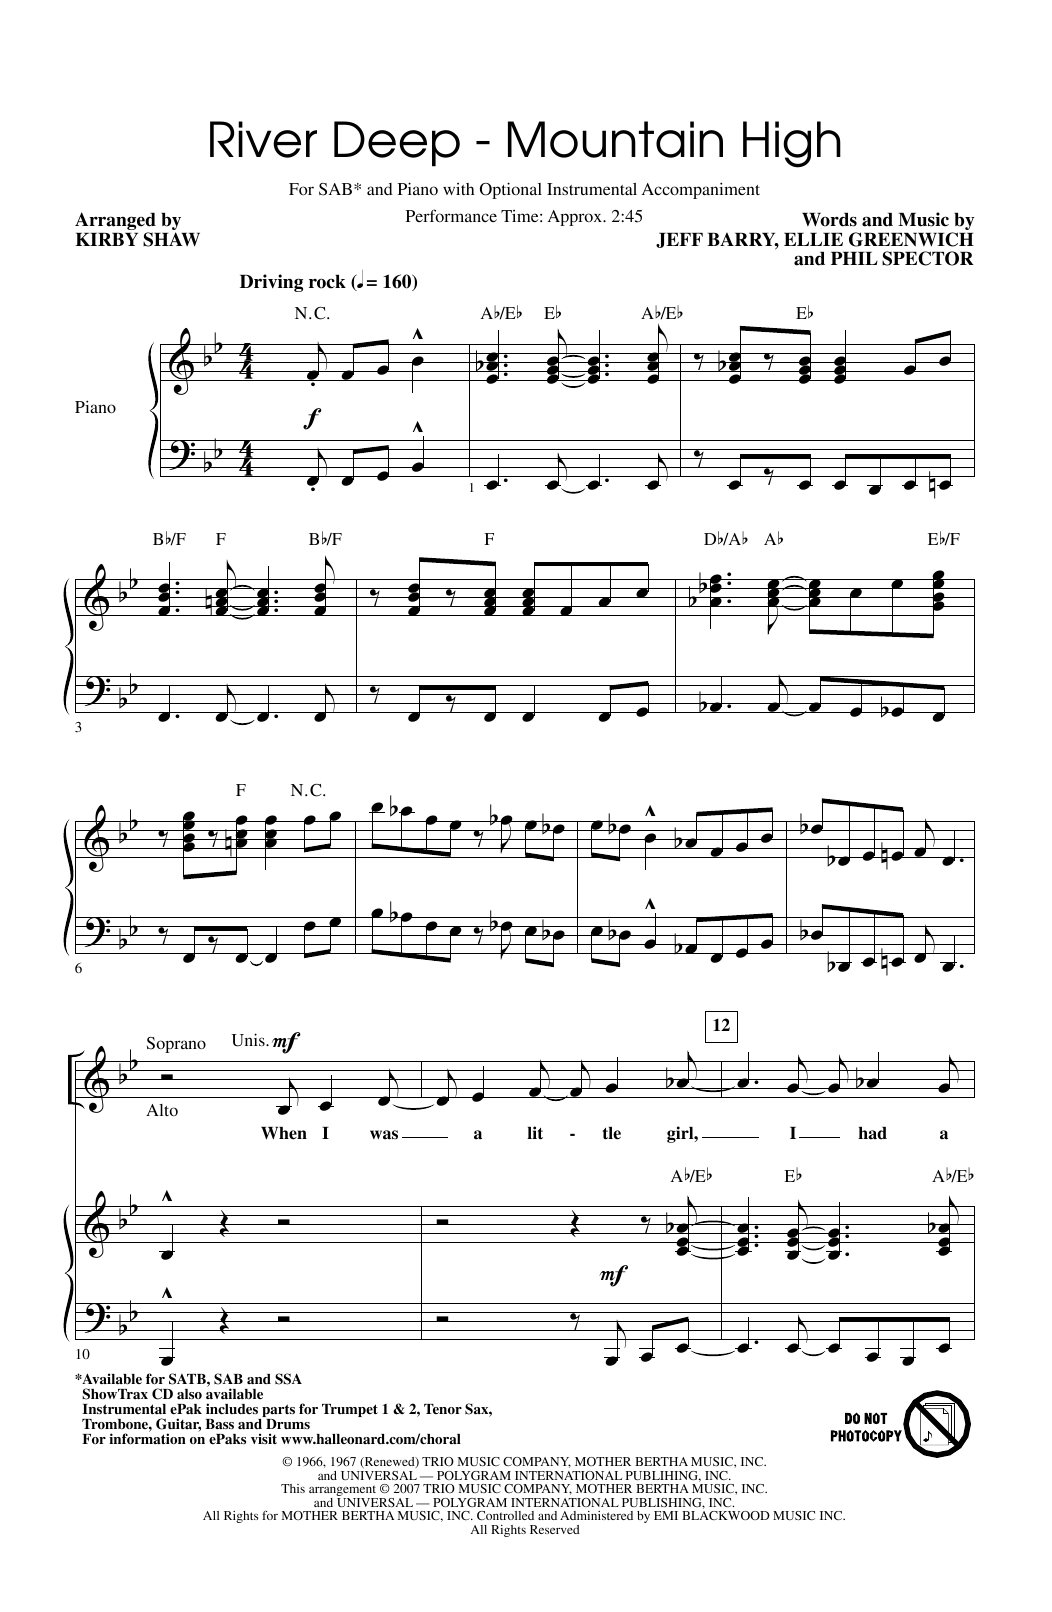 Tina Turner River Deep - Mountain High (arr. Kirby Shaw) Sheet Music Notes & Chords for SAB Choir - Download or Print PDF